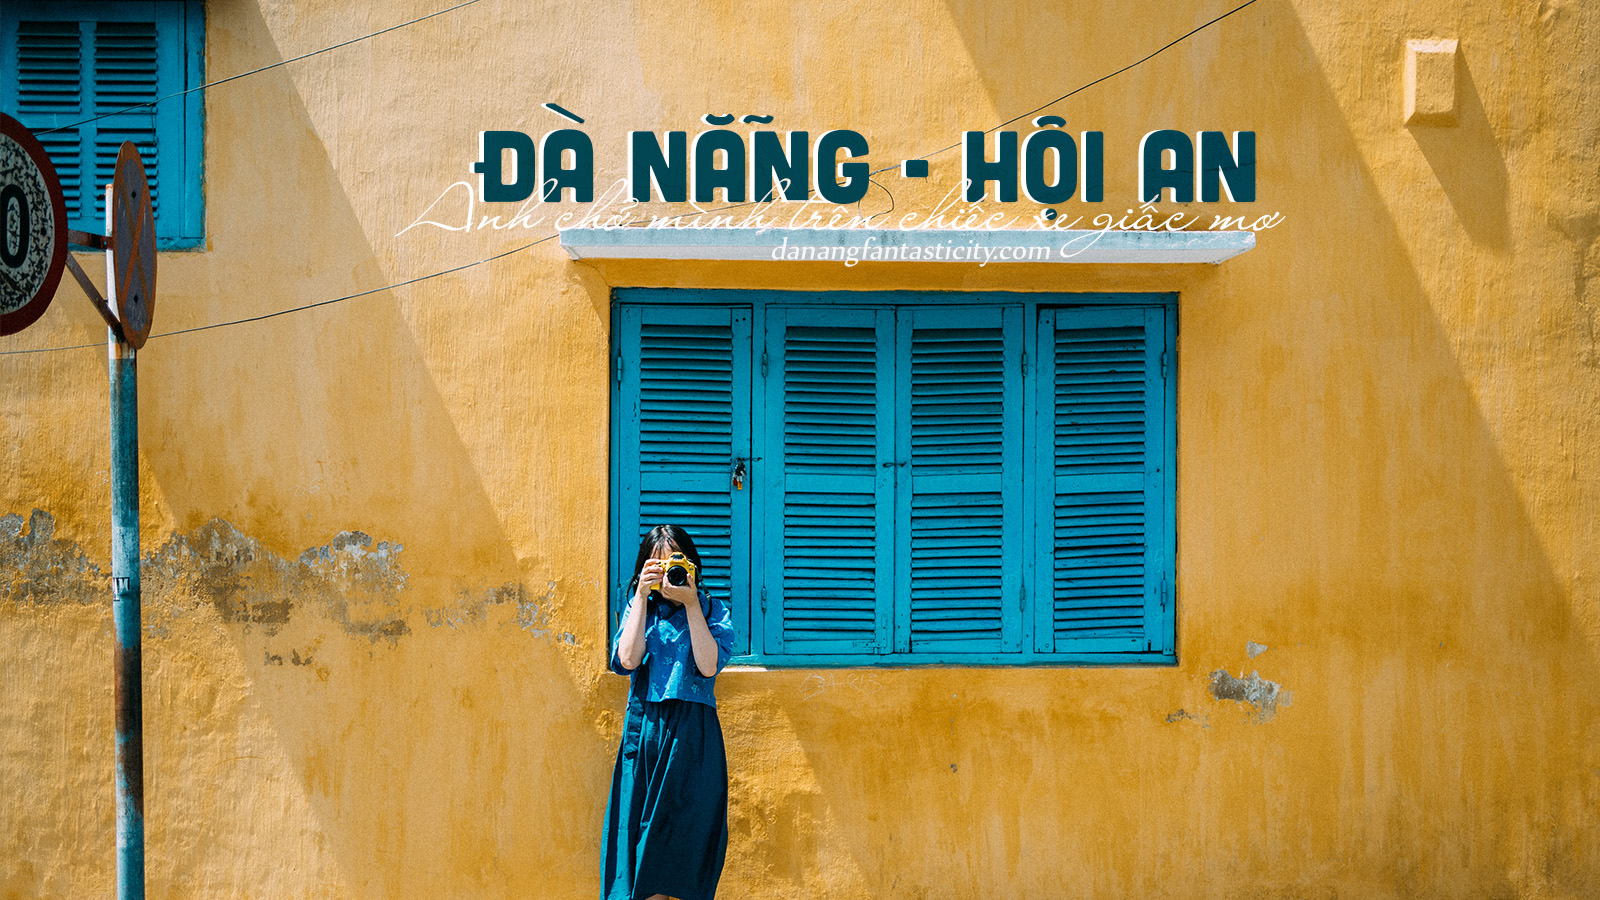 Da Nang Hoi An Anh Cho Minh Tren Chiec Xe Giac Mo Mievatho Danang Fantasticity Com Background